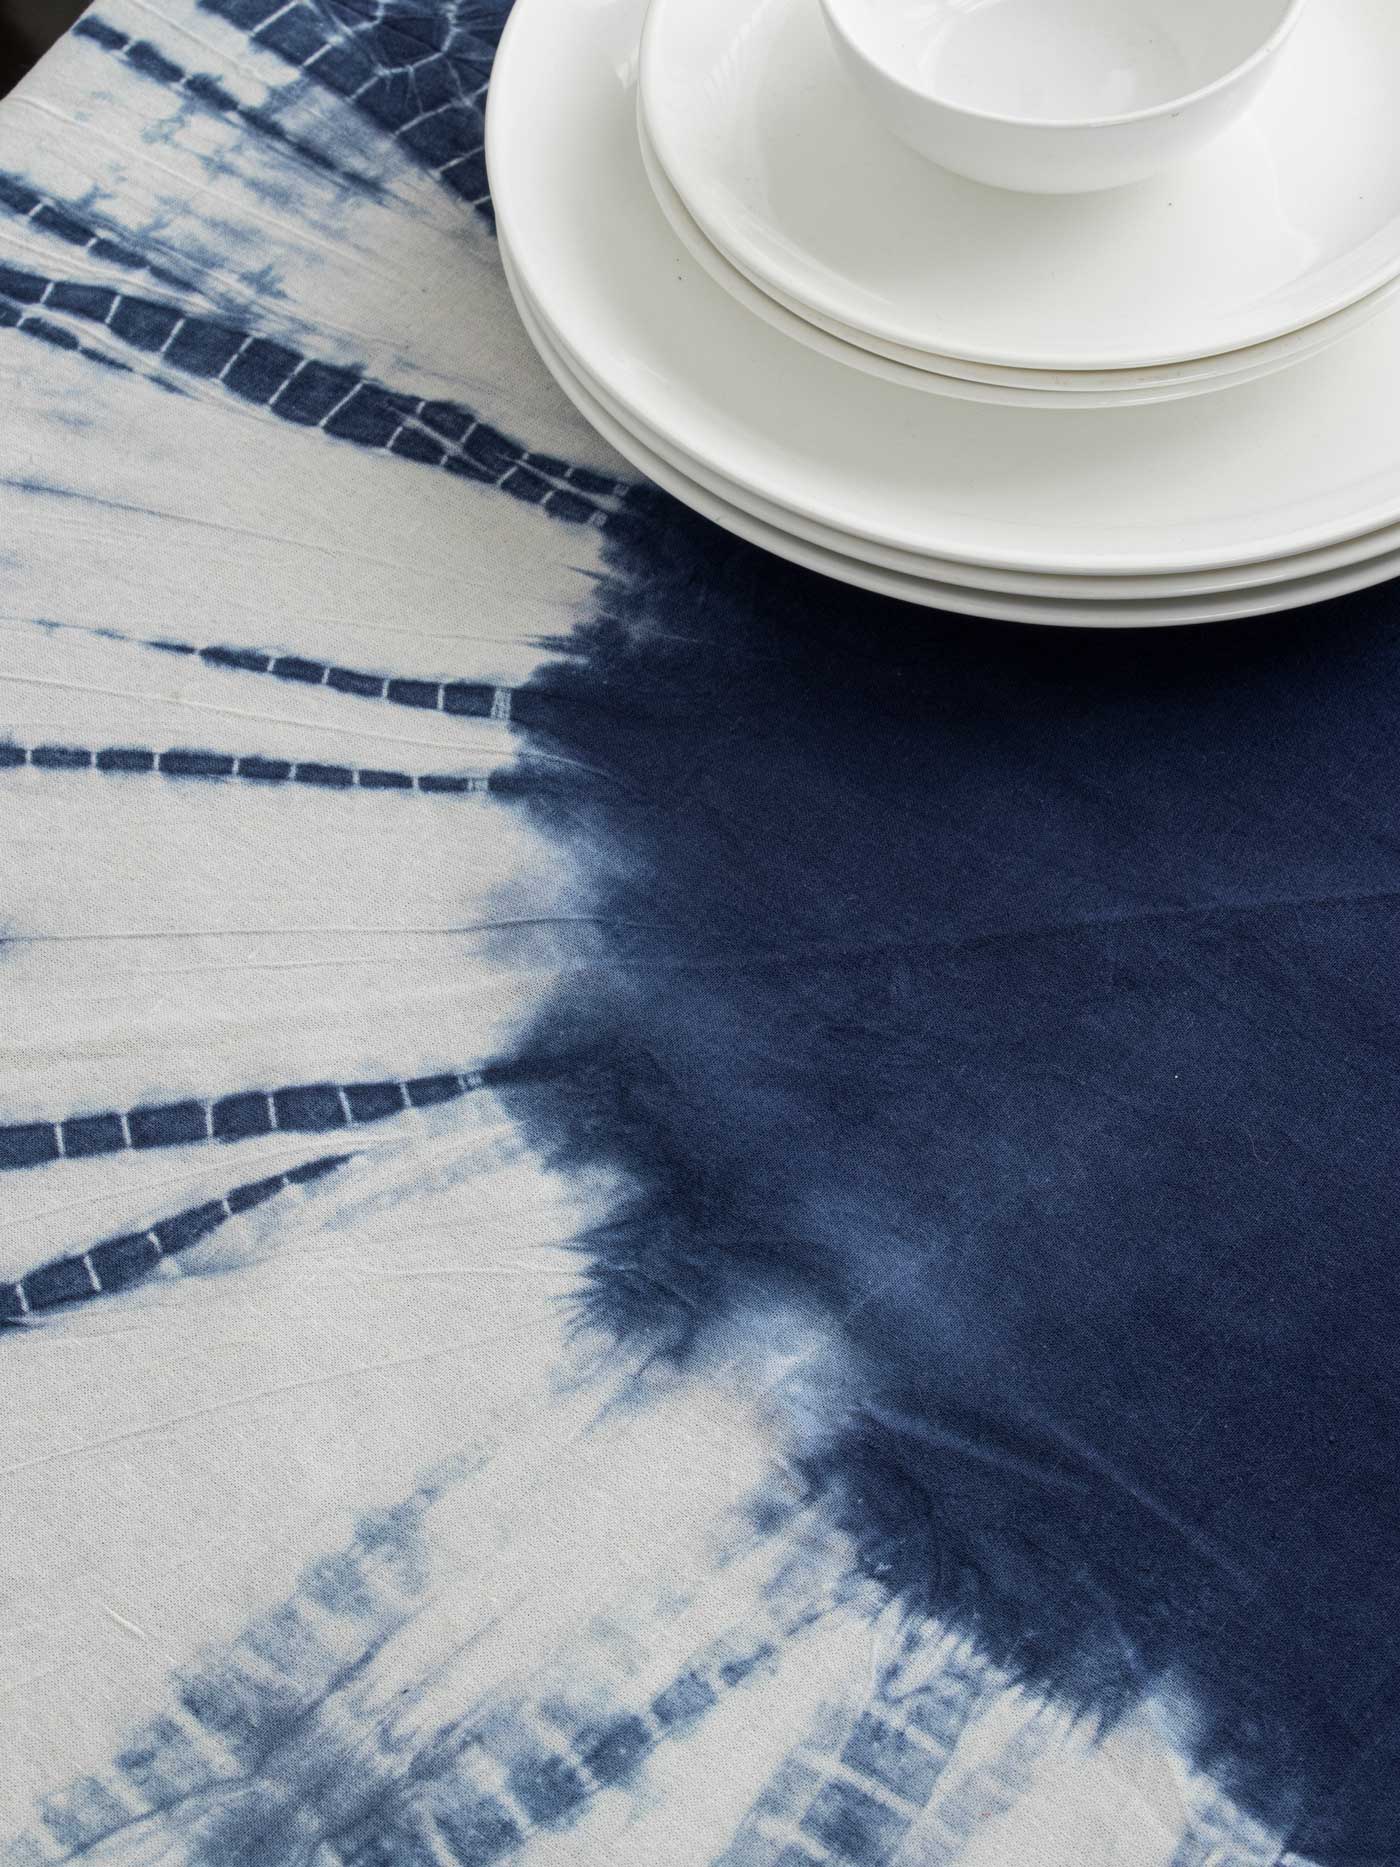 Dark Blue Round Tie & Dye Table Cover